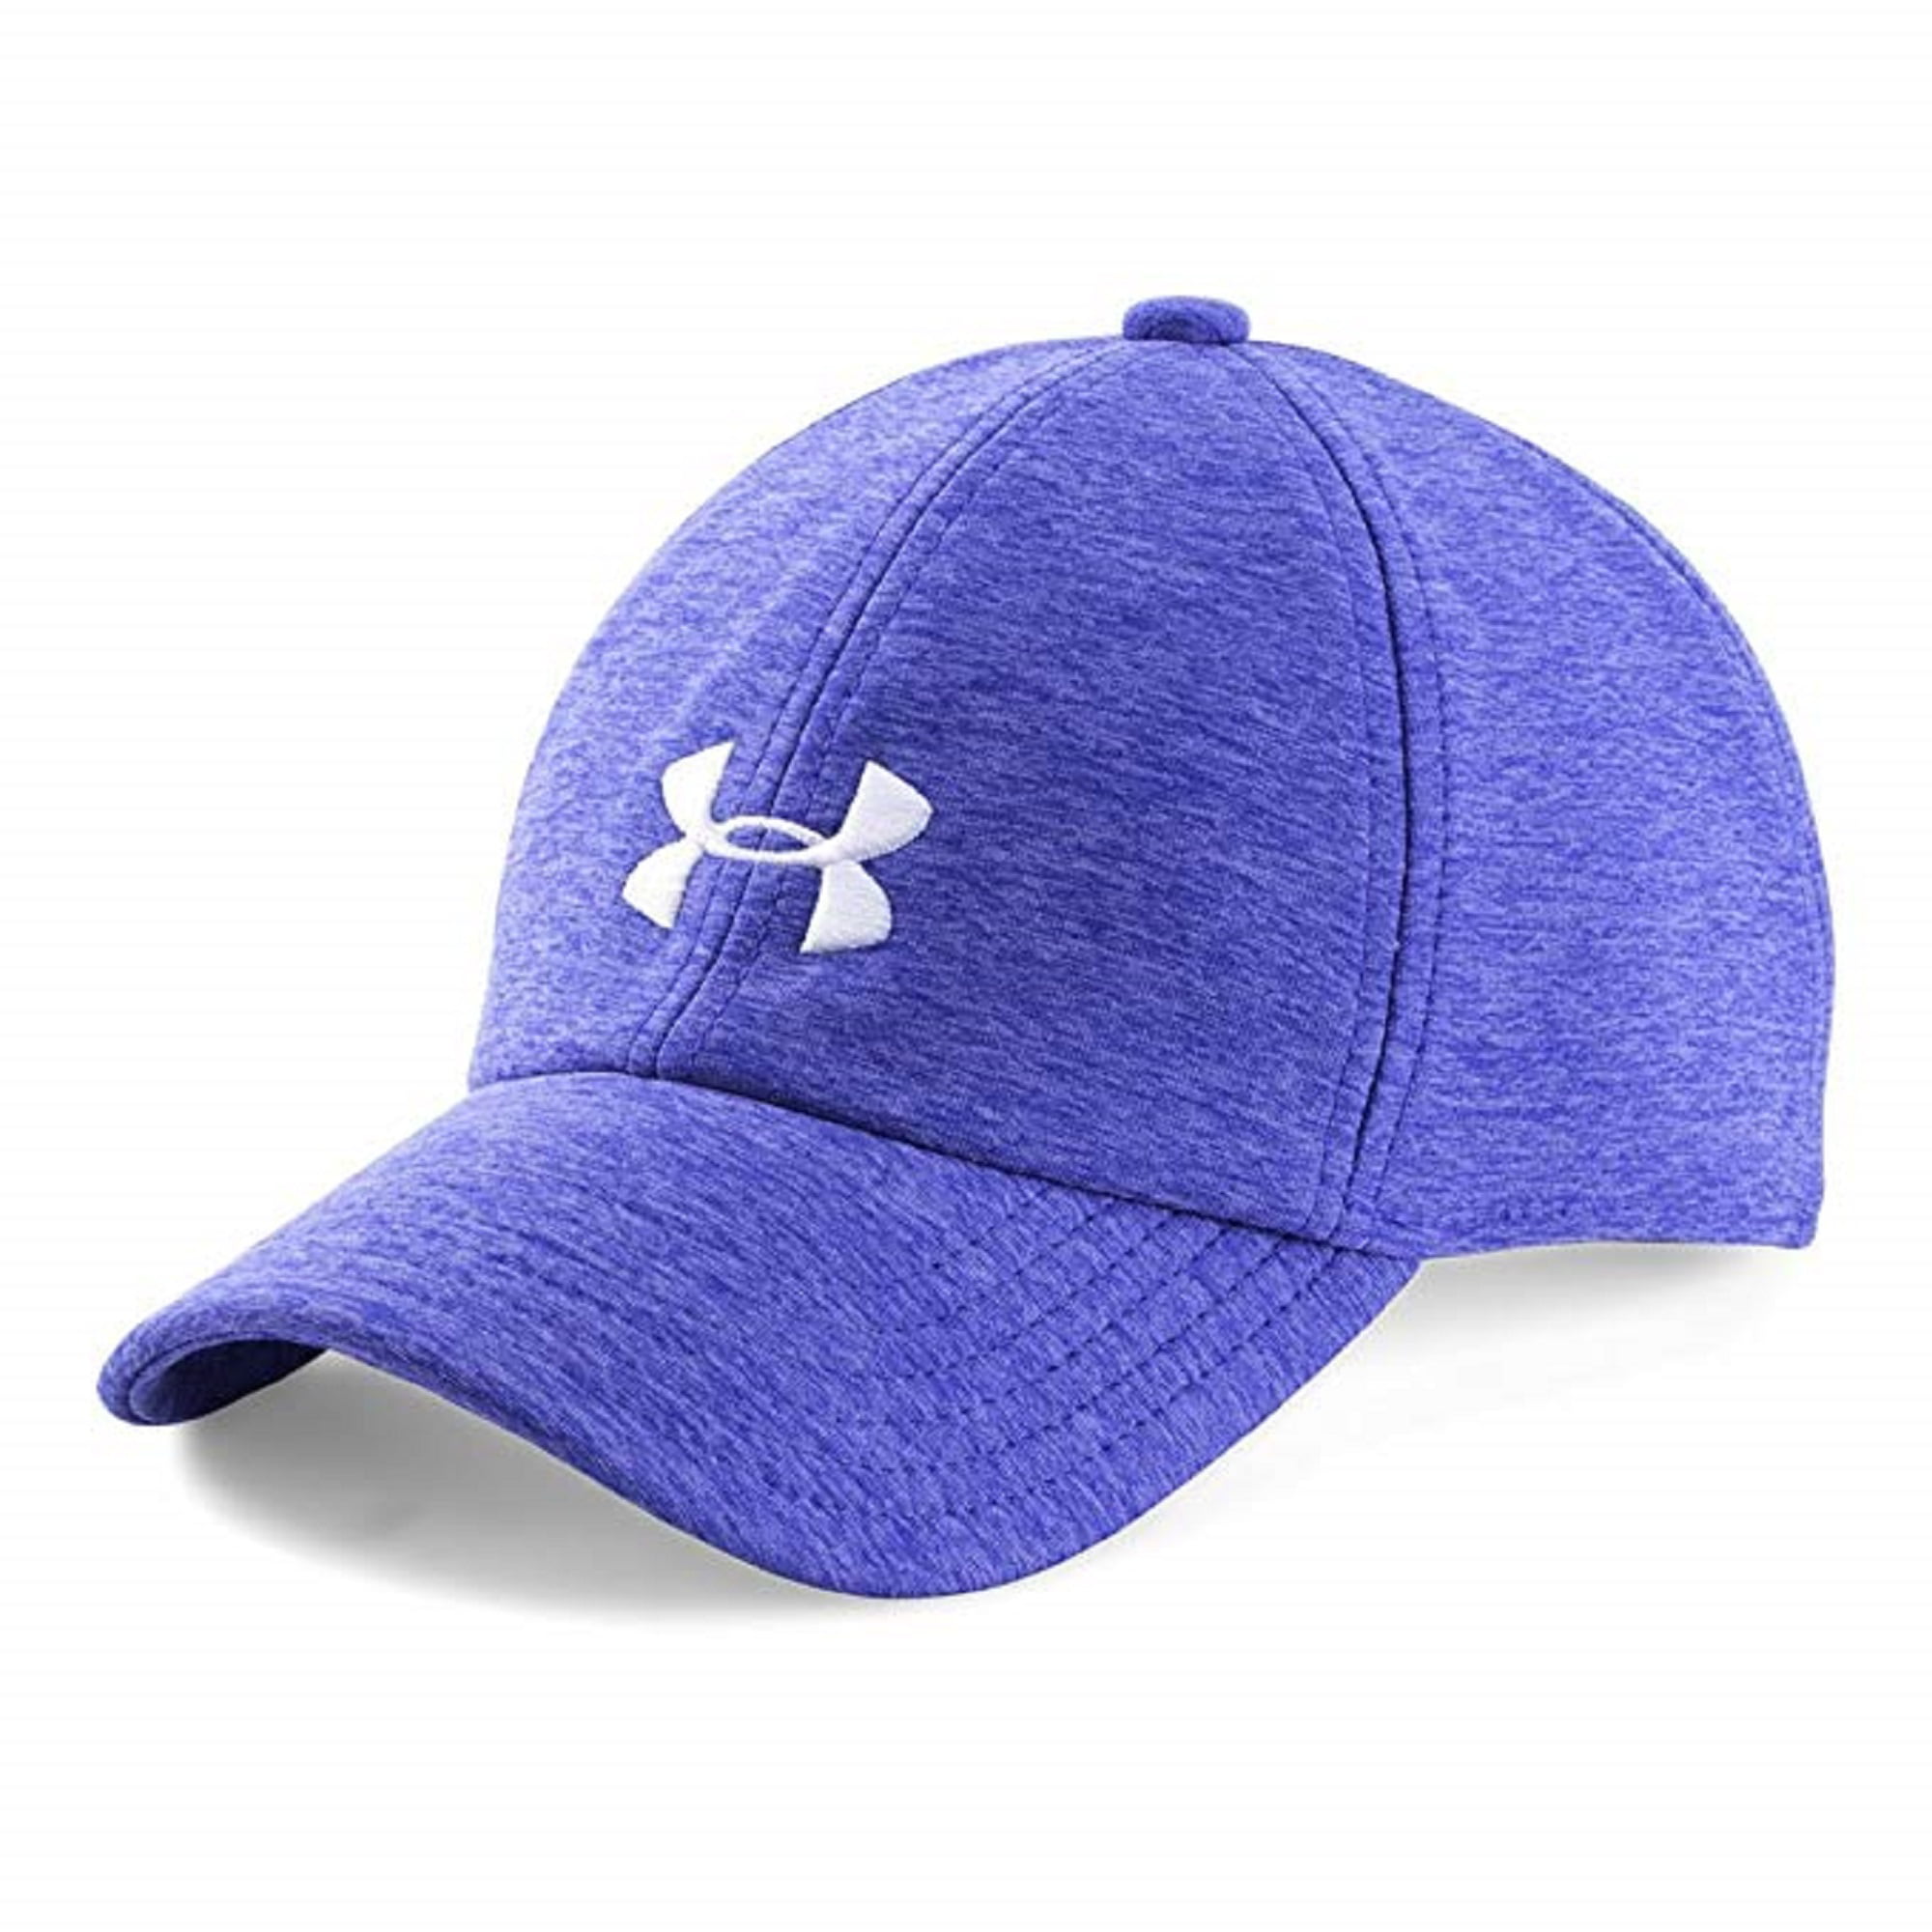 purple under armour hat